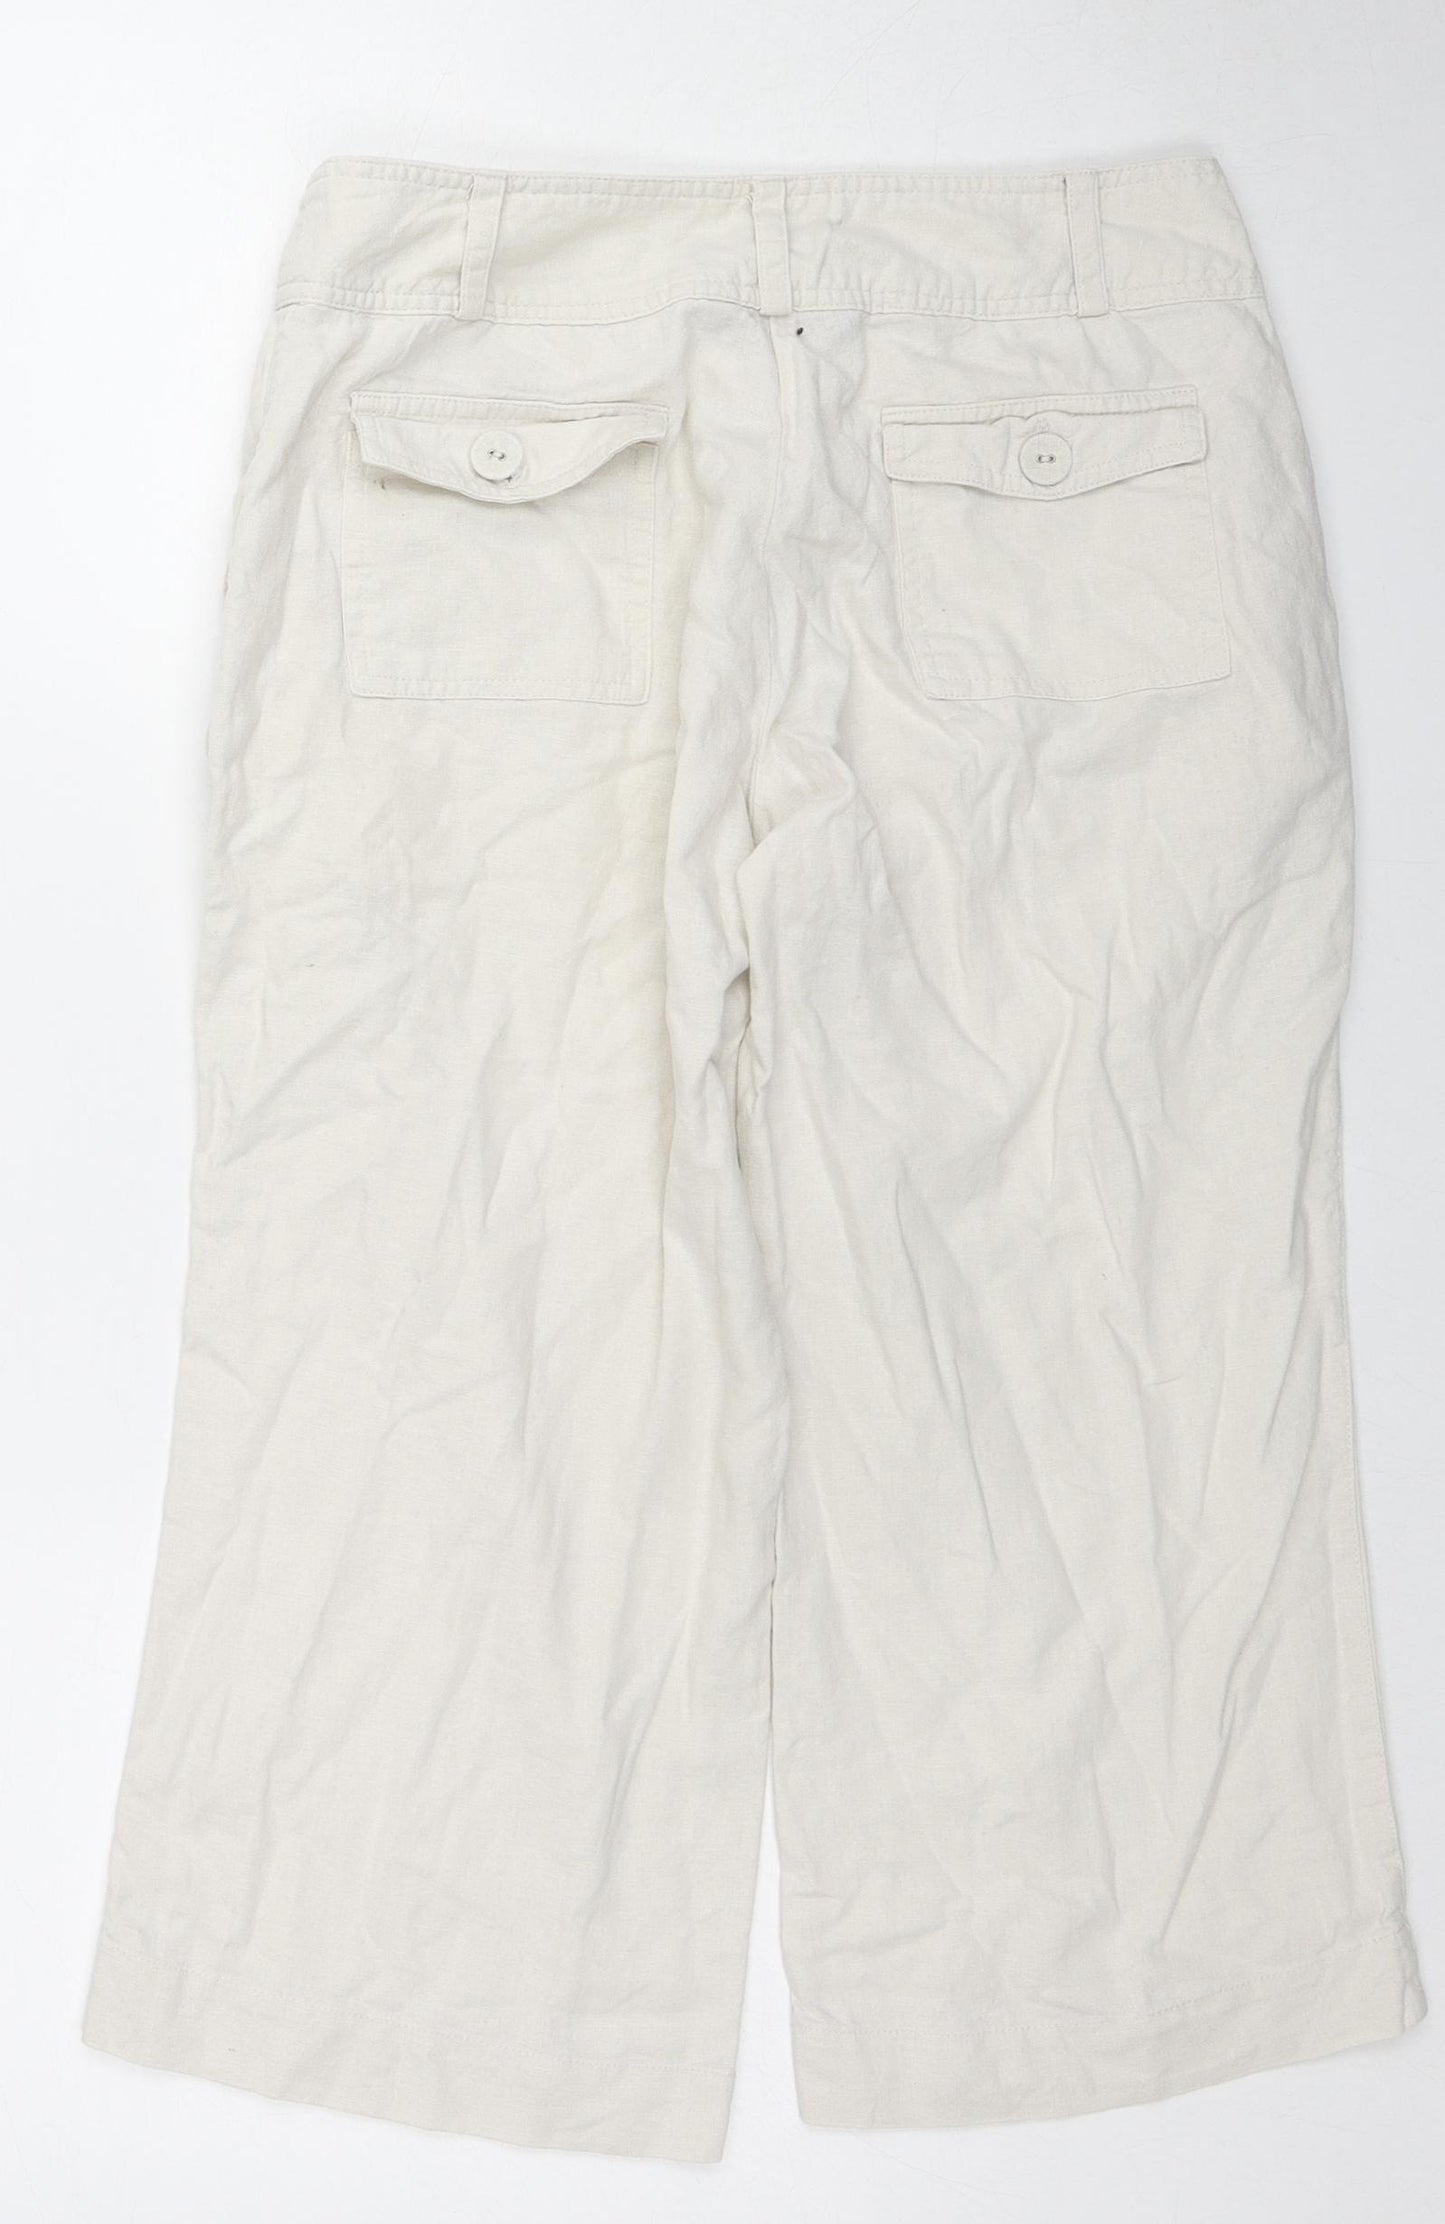 New Look Womens Beige Linen Trousers Size 10 L20 in Regular Zip